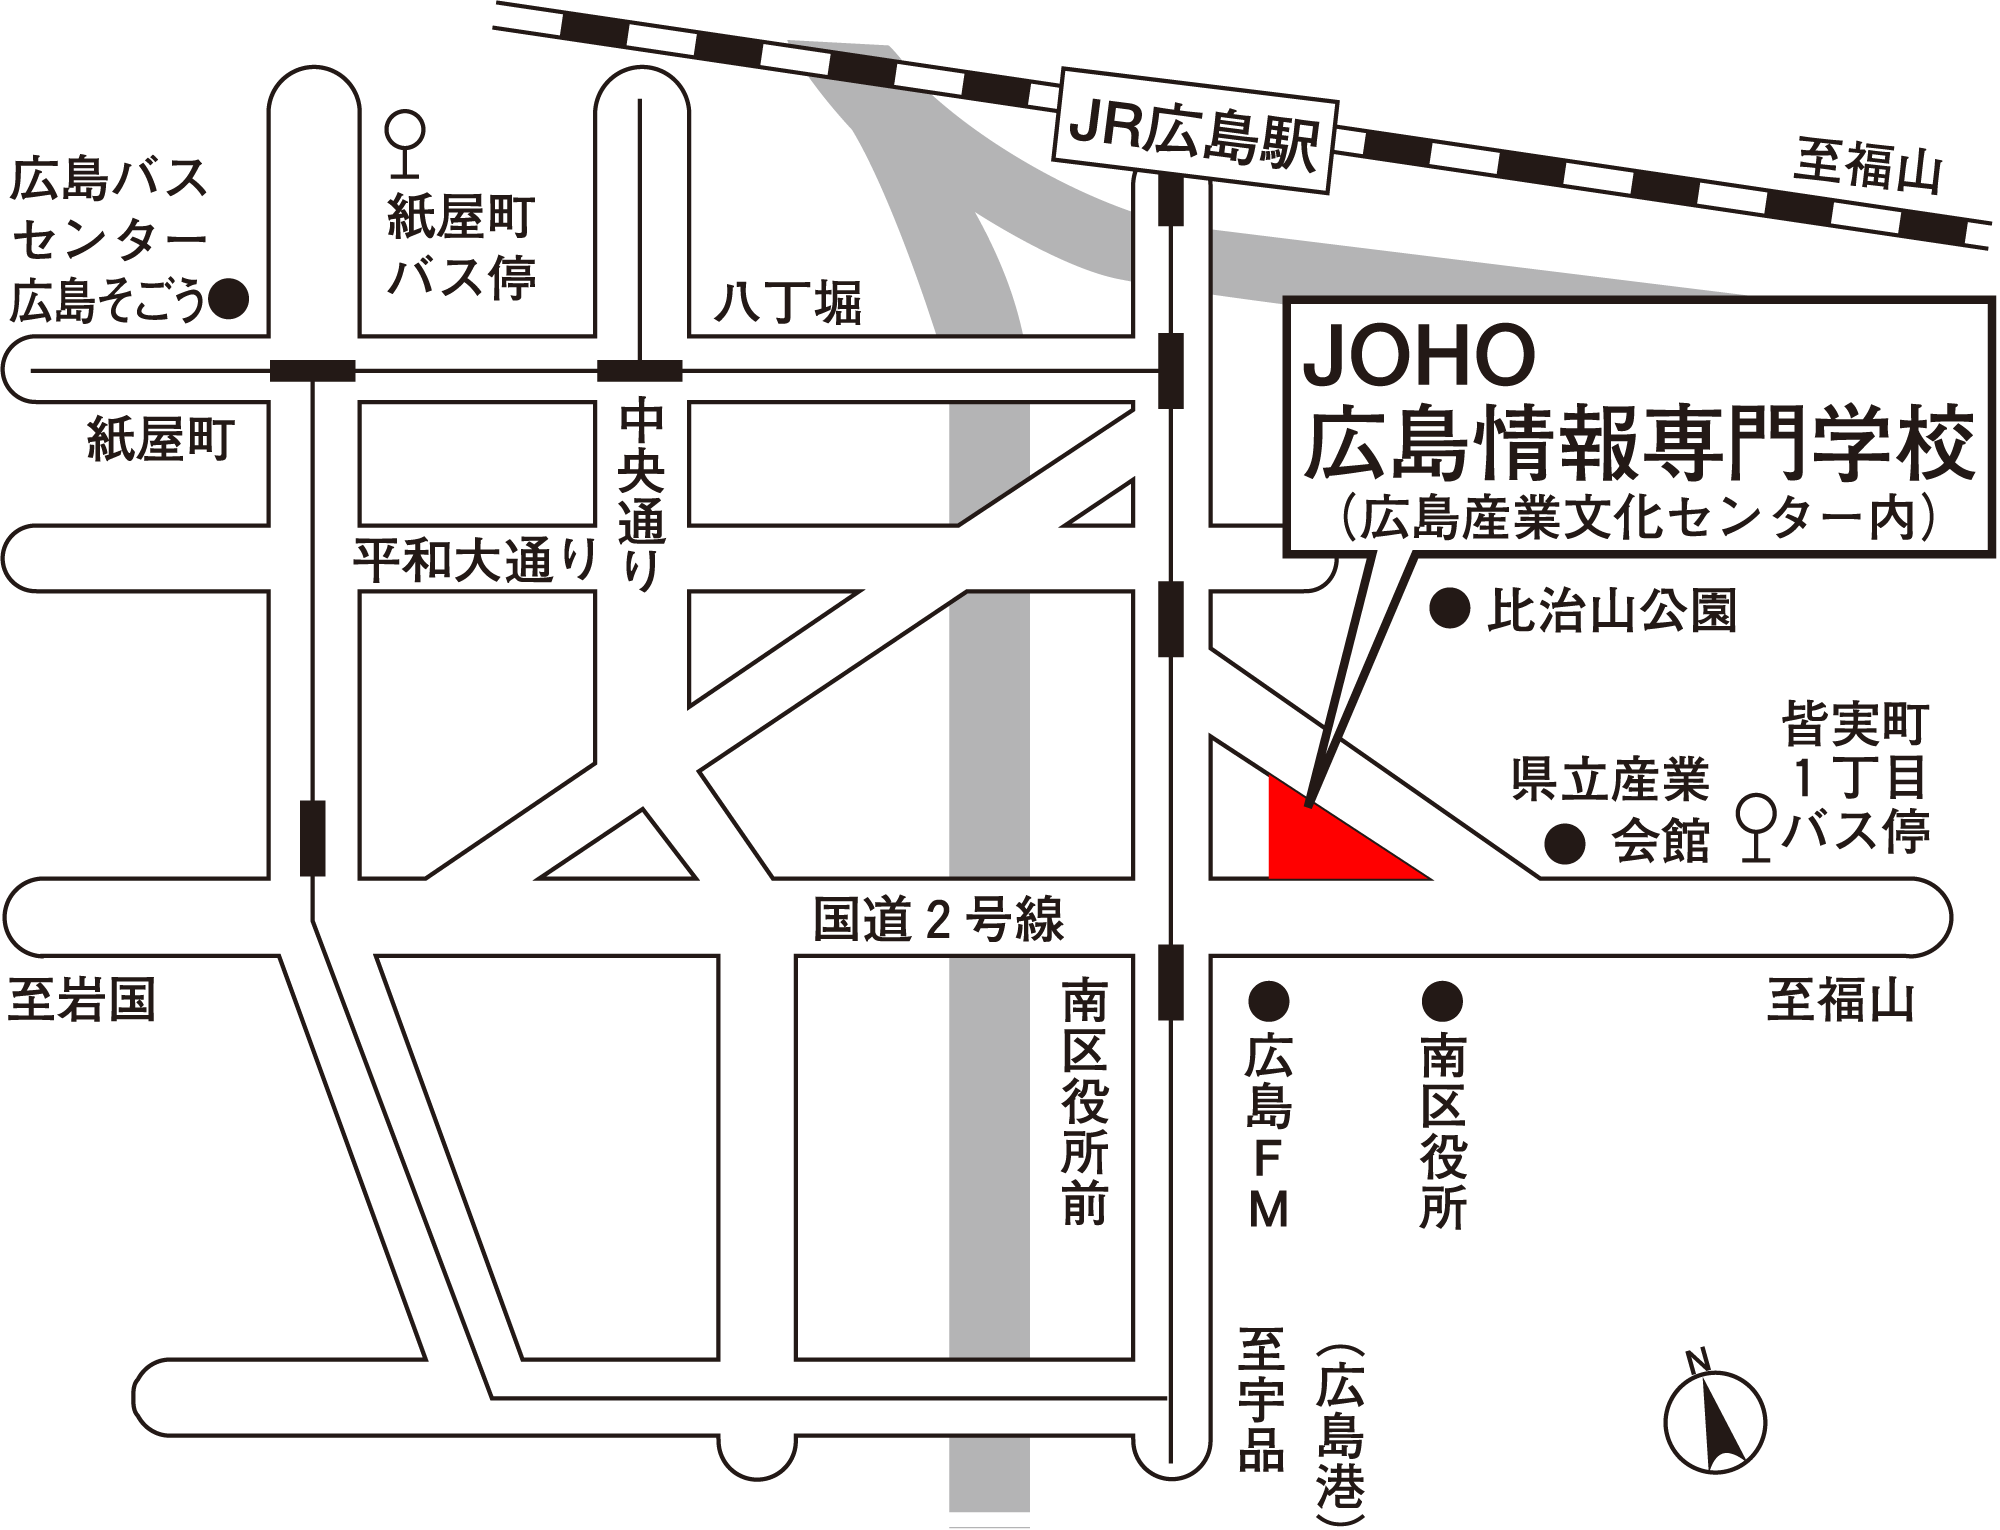 JOHO広島情報専門学校 地図